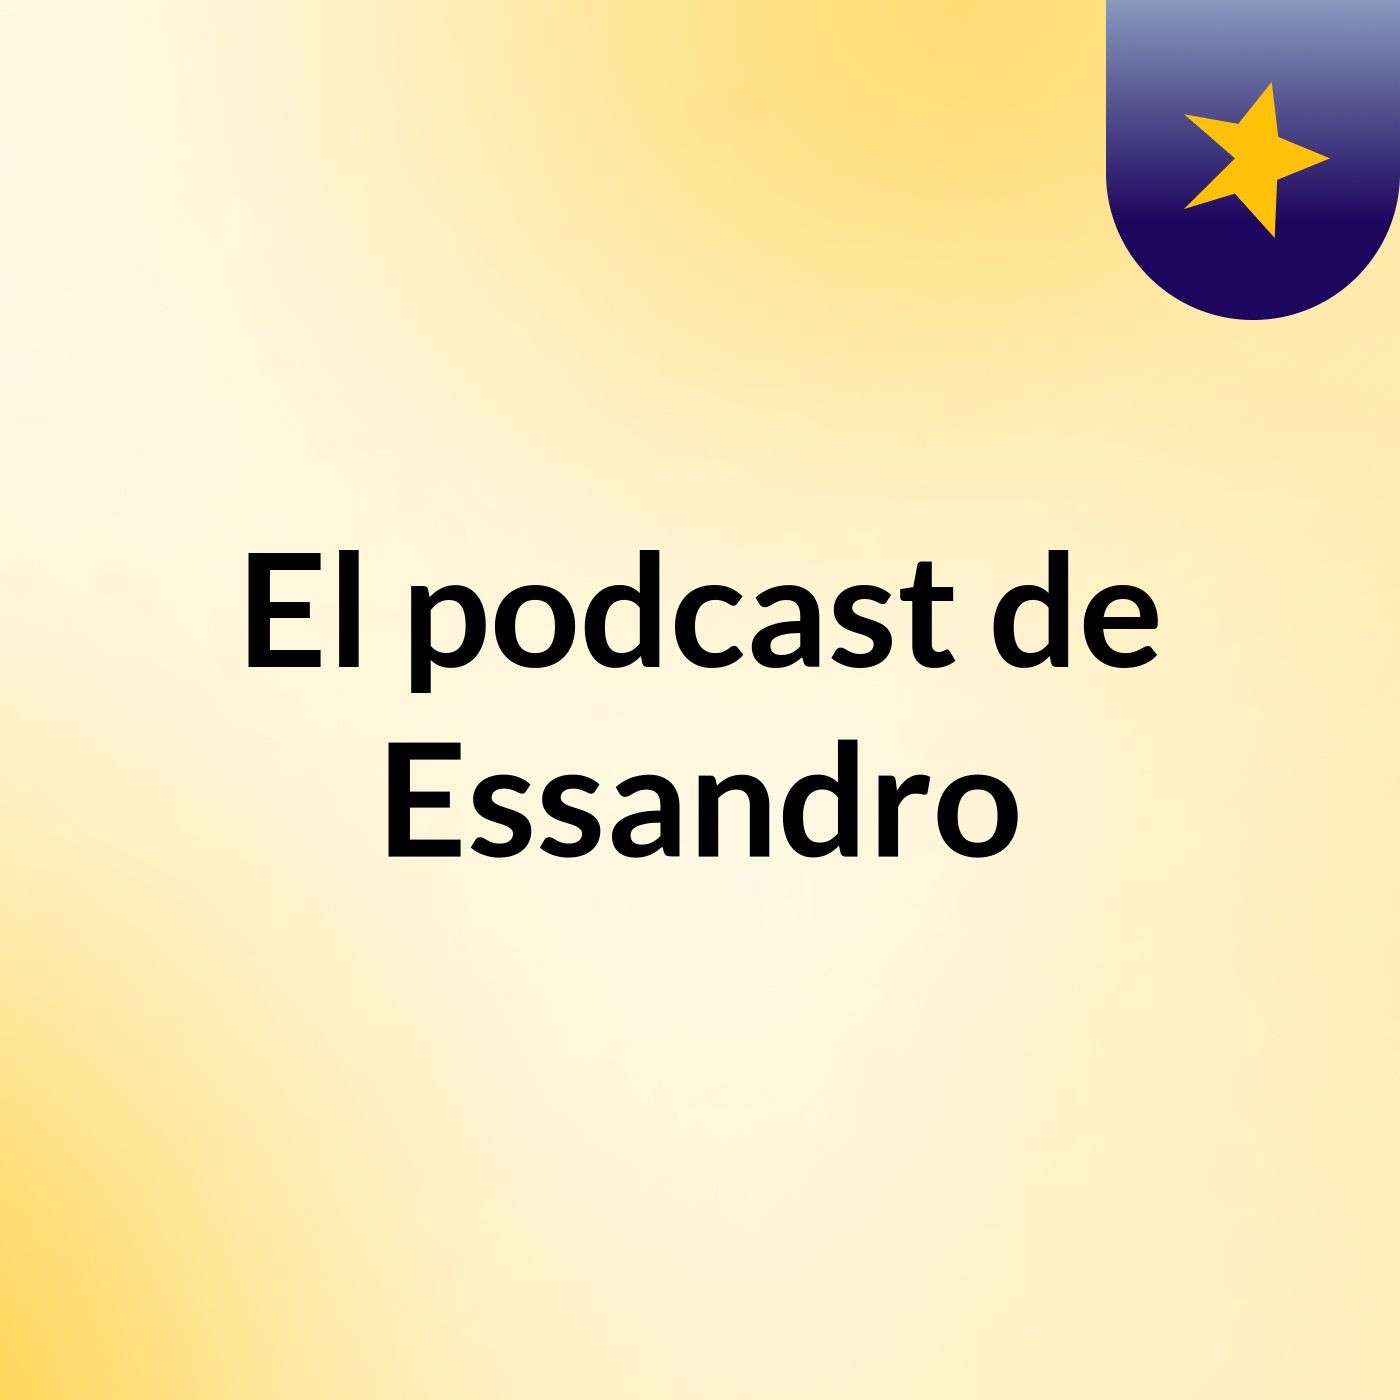 Episodio 9 - El podcast de Essandro